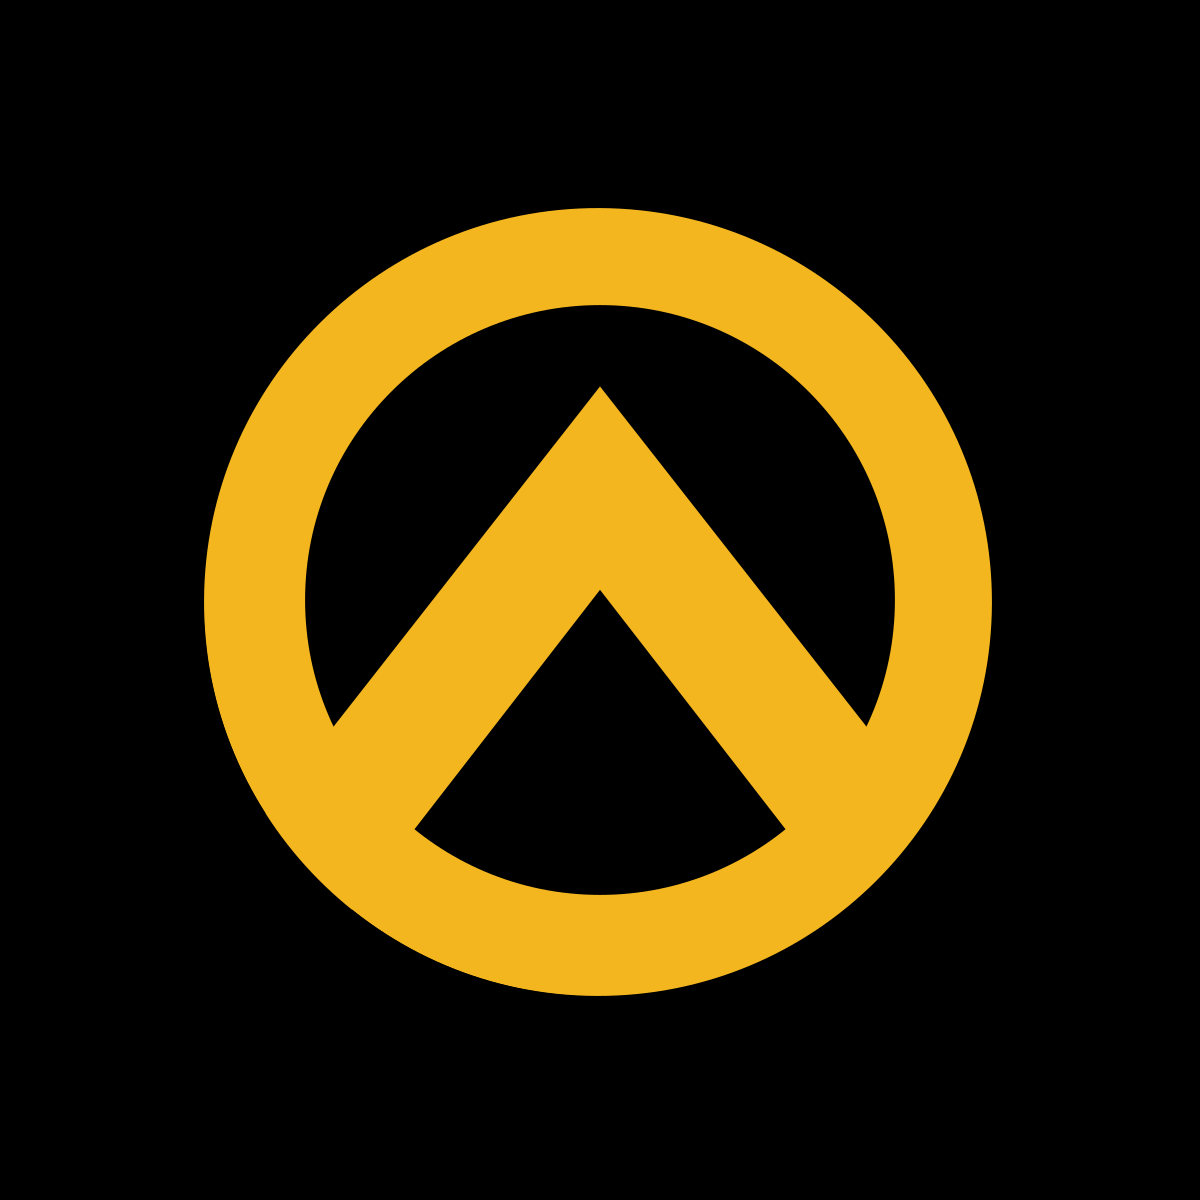 Black N Yellow Circle Logo - Identitarian movement